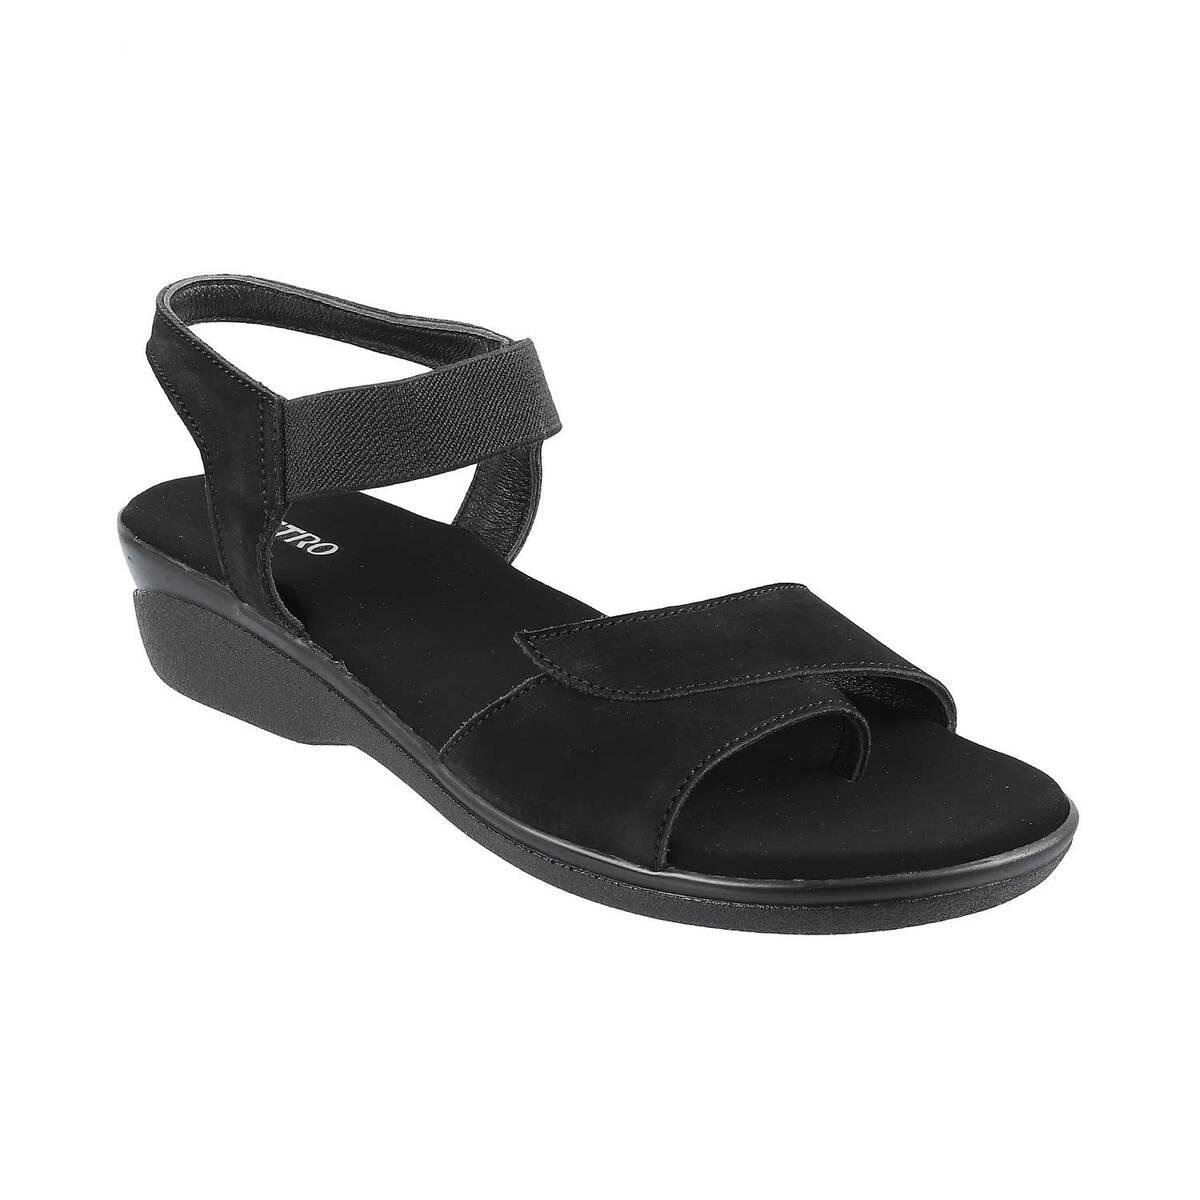 Buy Women Black Casual Sandals Online | SKU: 44-48-11-36-Metro Shoes